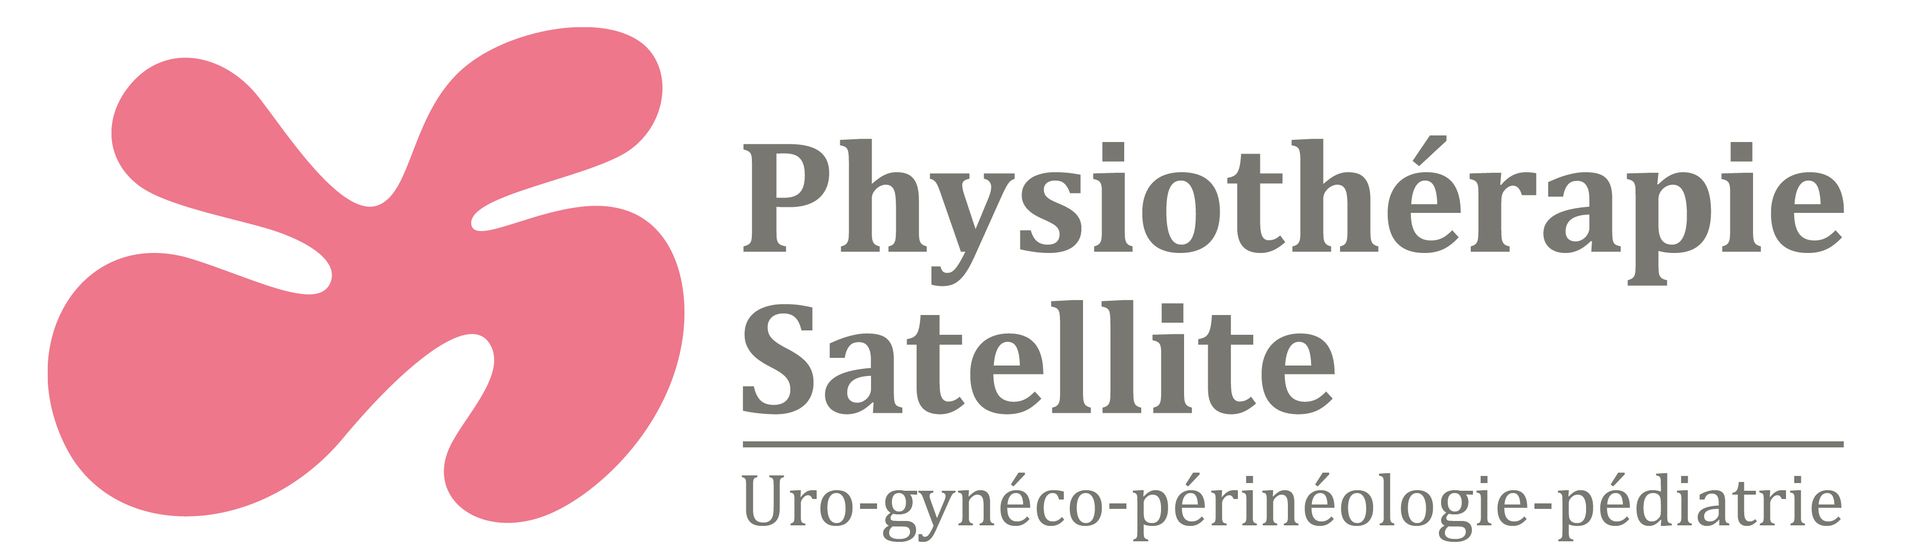 Urologie-Rééducation-Physiothérapie Satellite-Yverdon